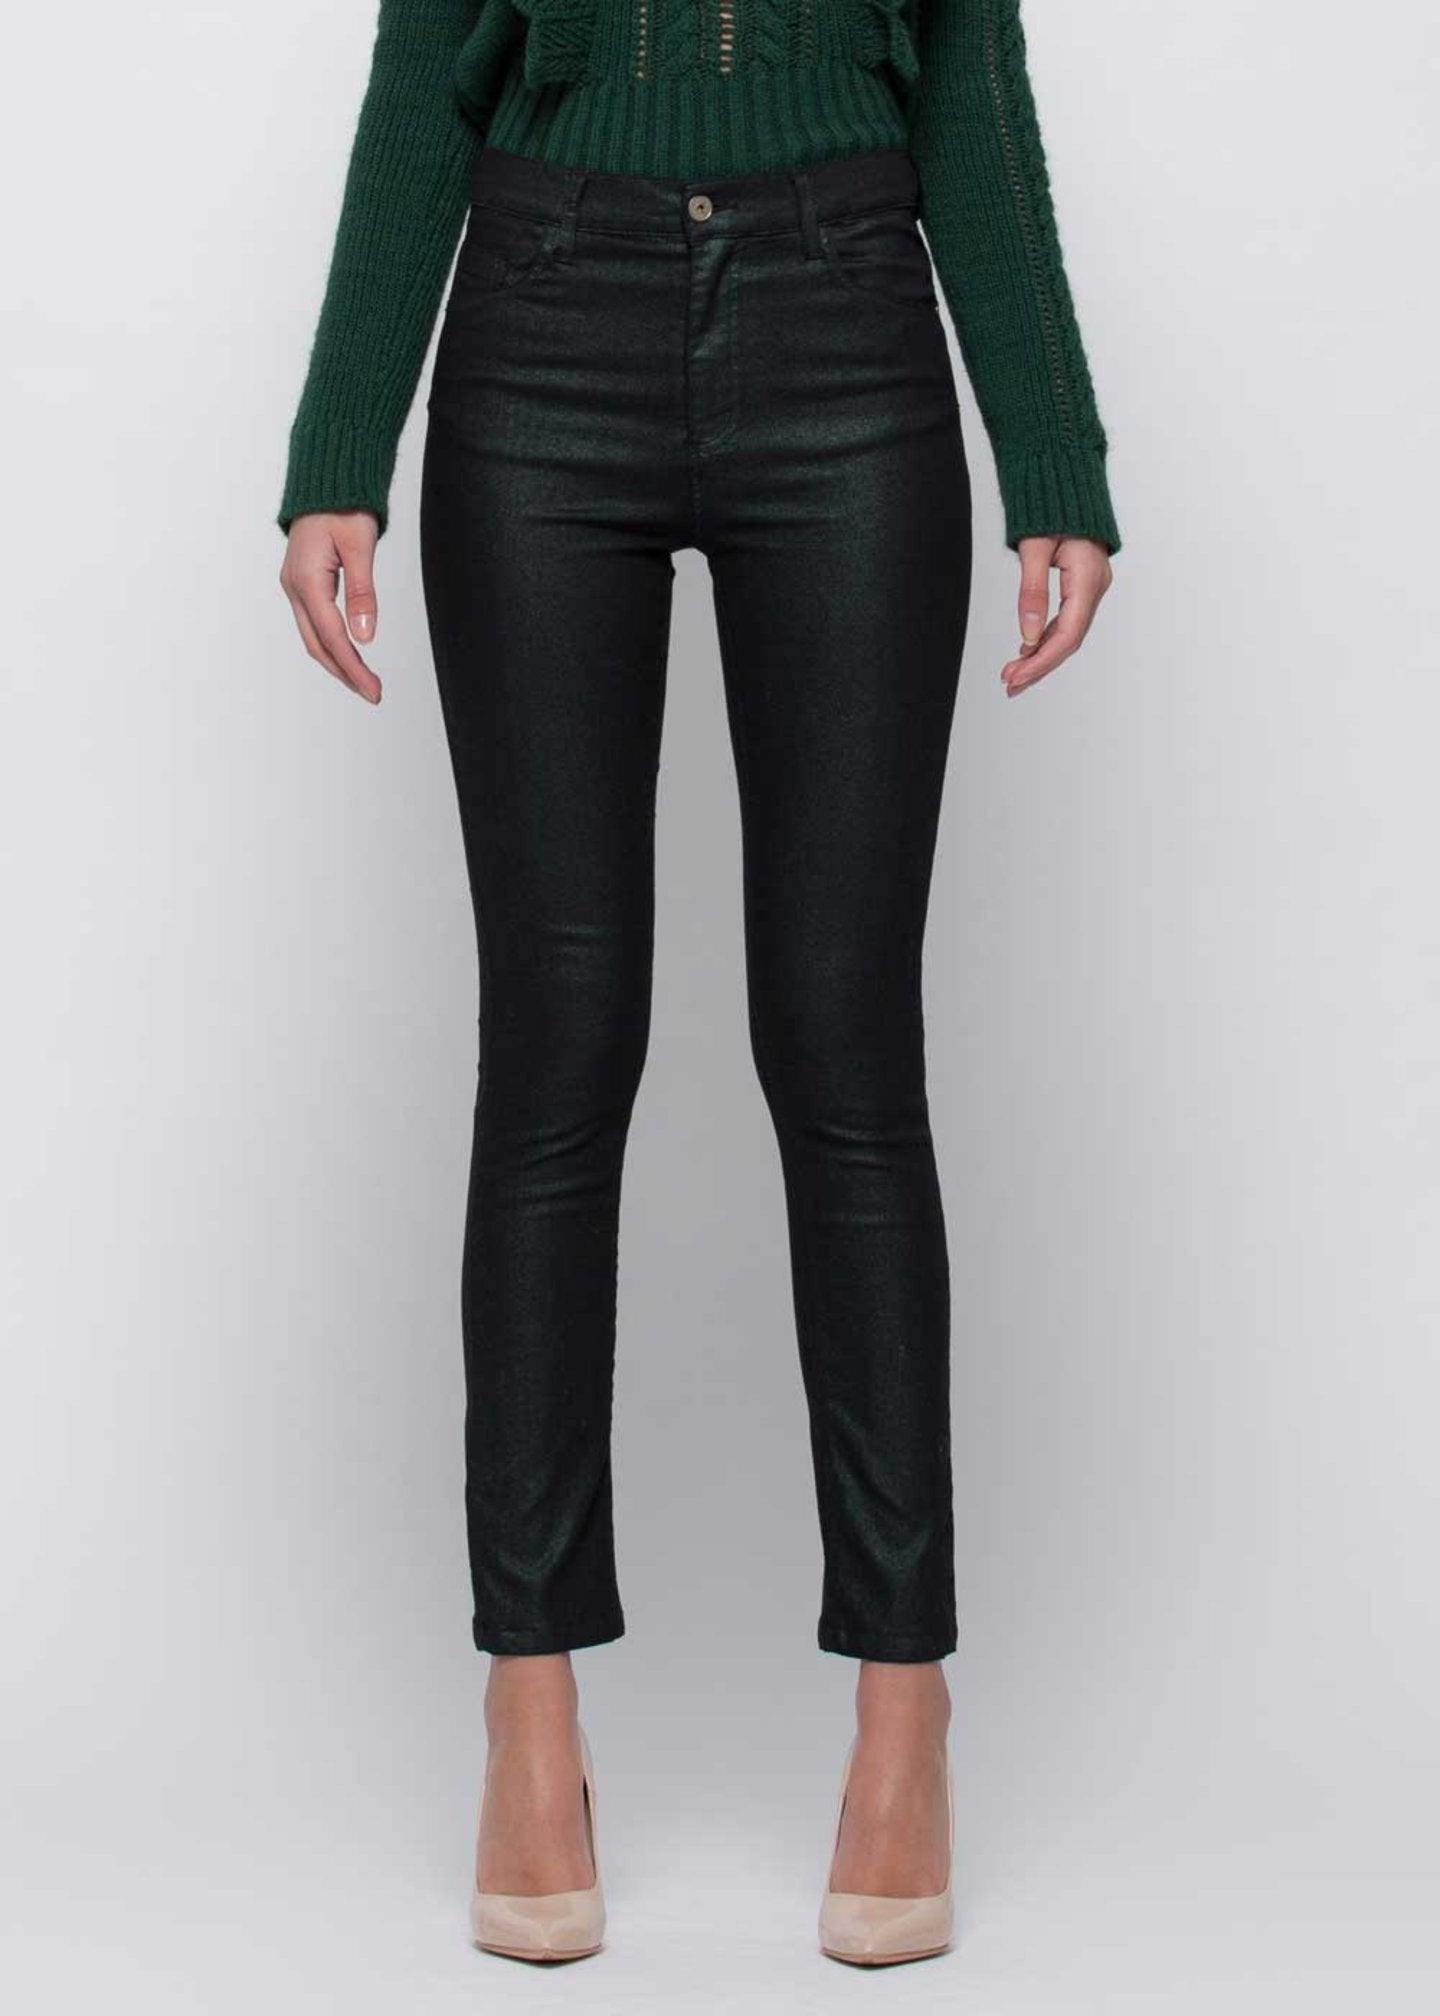 Pantalone Kocca Modello Skinny / Green - Ideal Moda